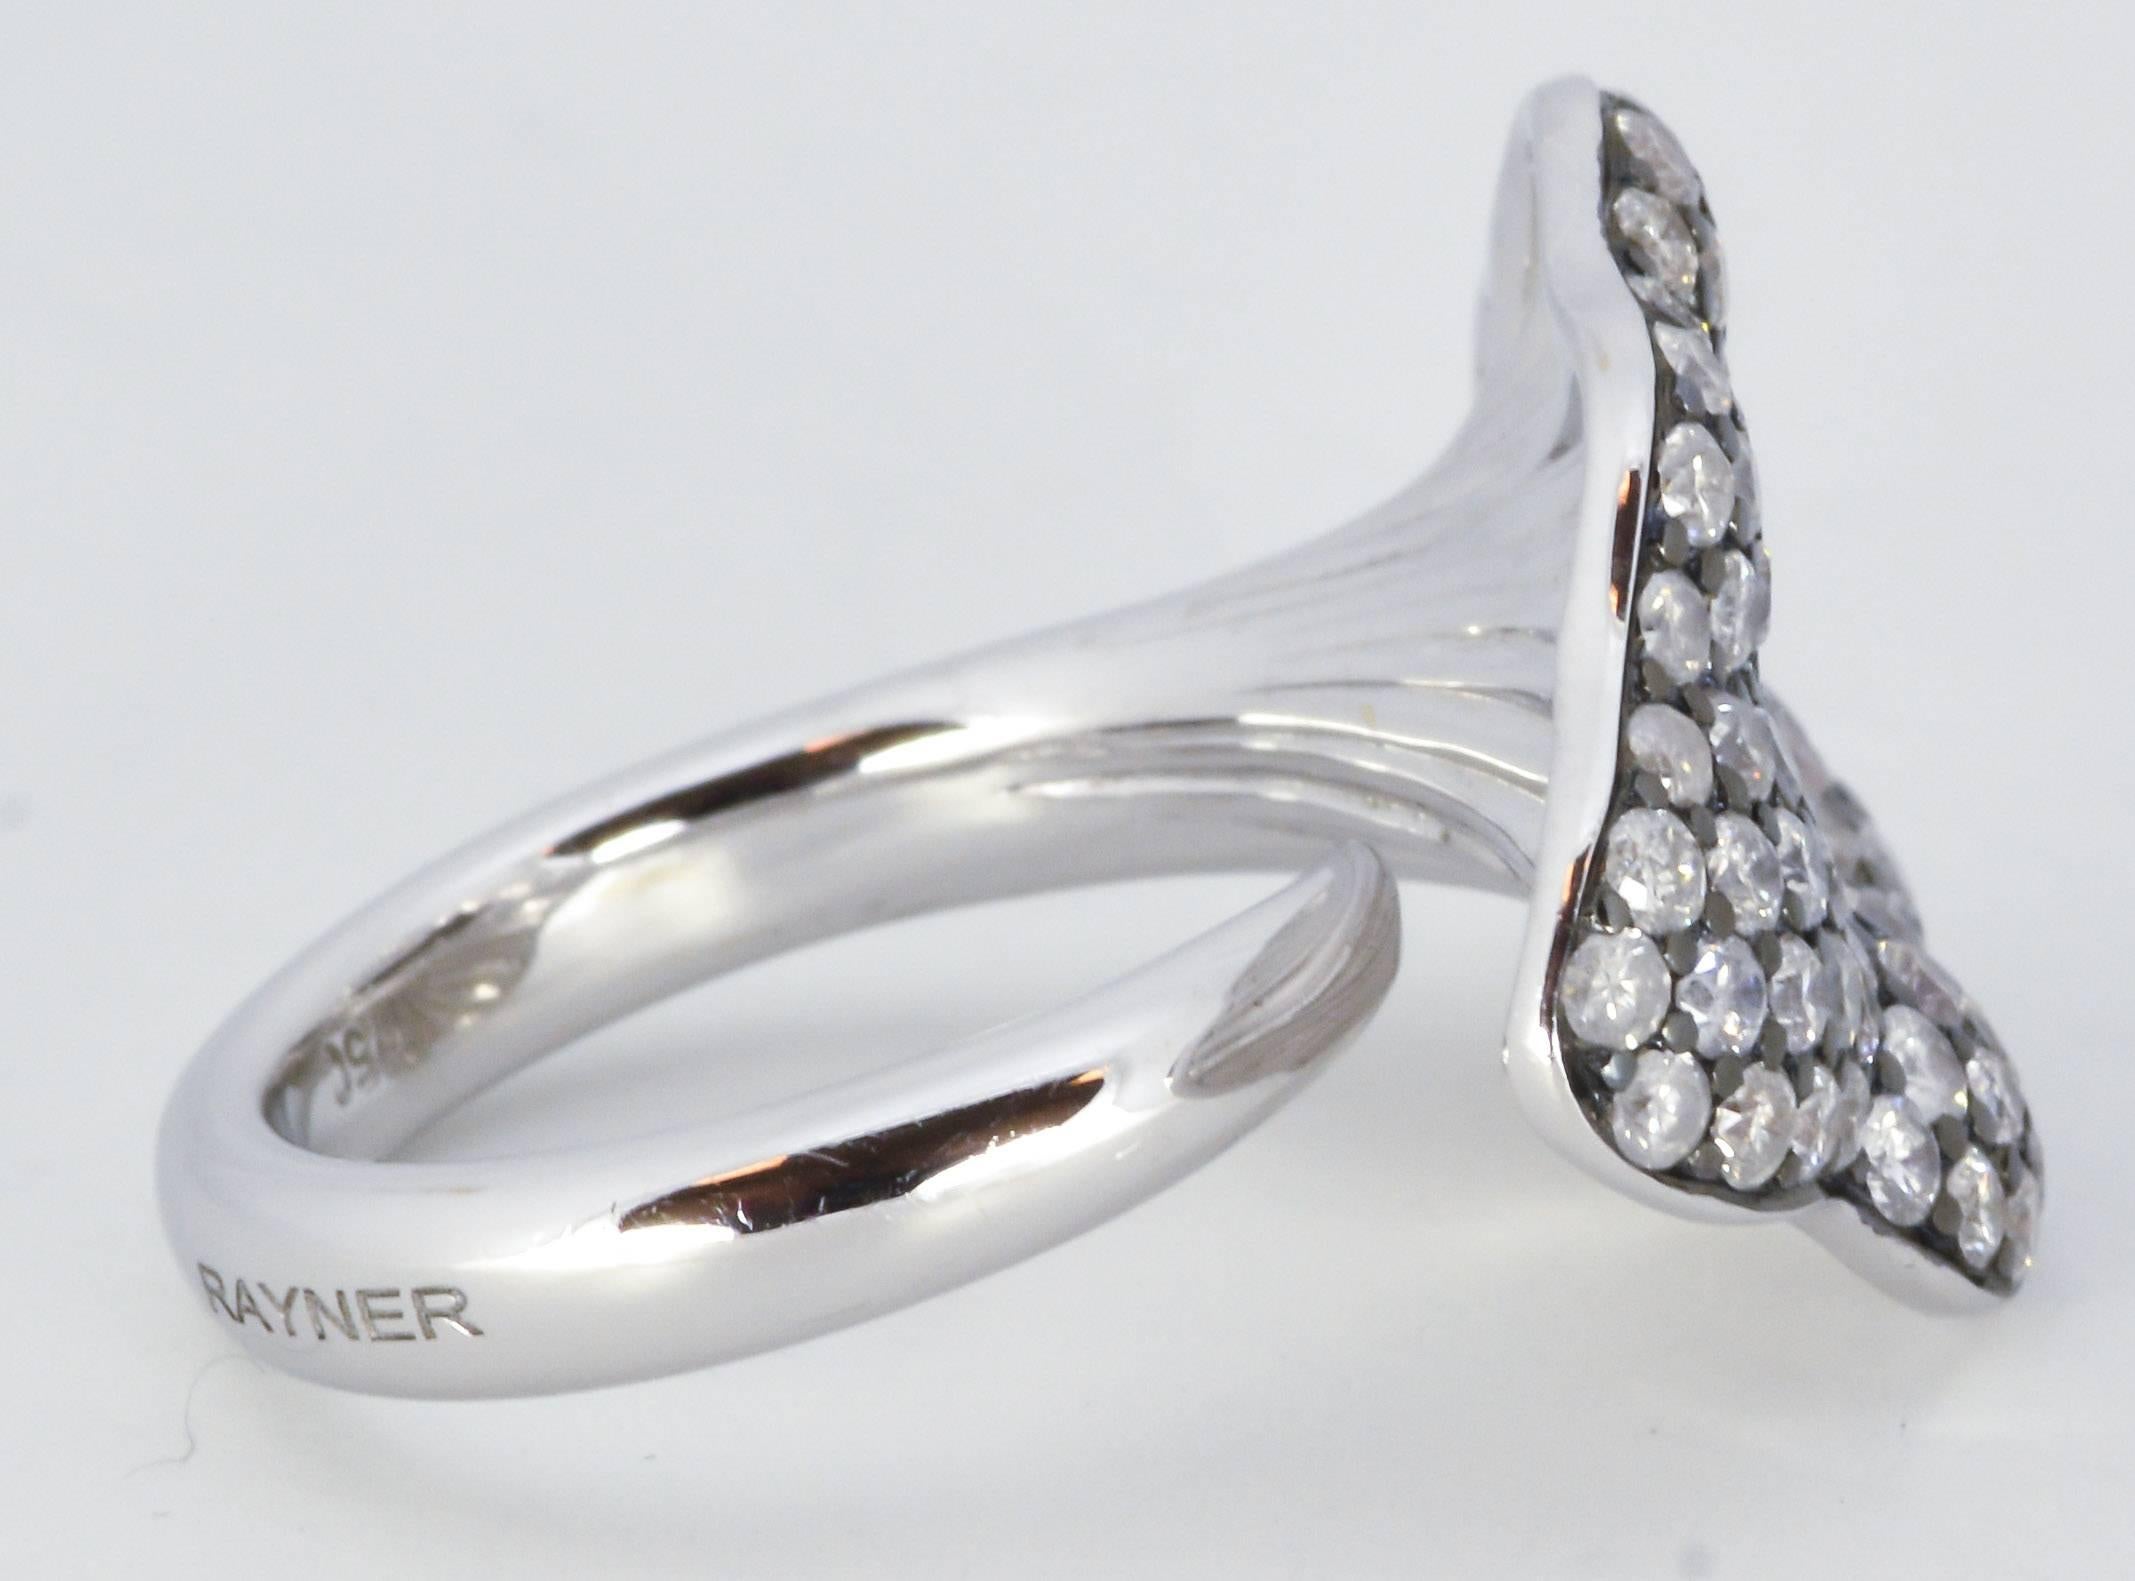 Brilliant Cut Rodney Rayner 18K White Gold Diamond Leaf Design Cocktail Ring